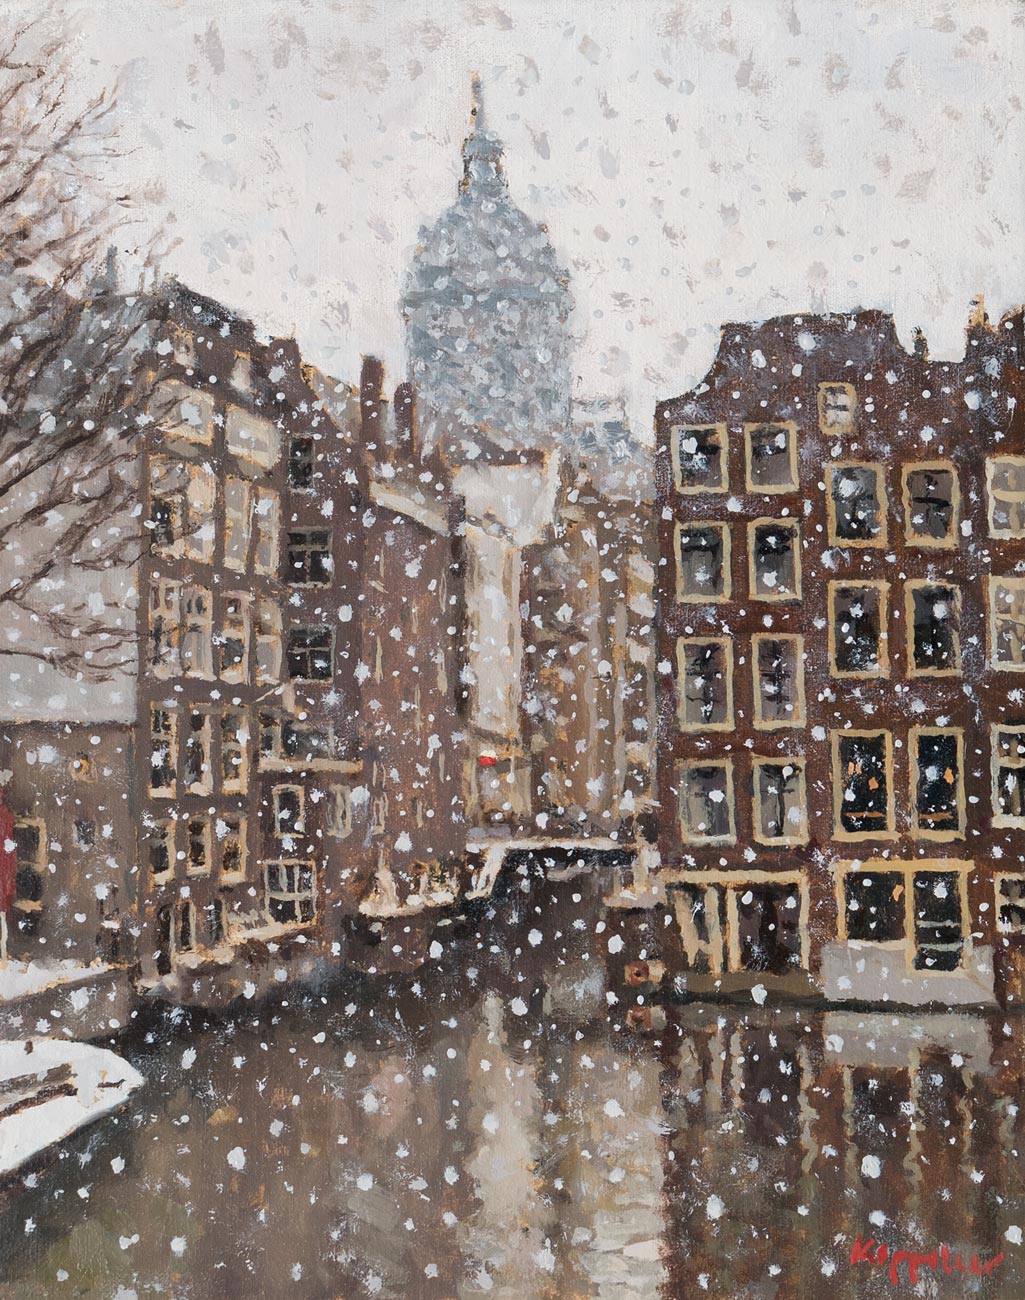 cityscape: 'Het Kolkje with snow' oil on canvas by Dutch painter Frans Koppelaar.